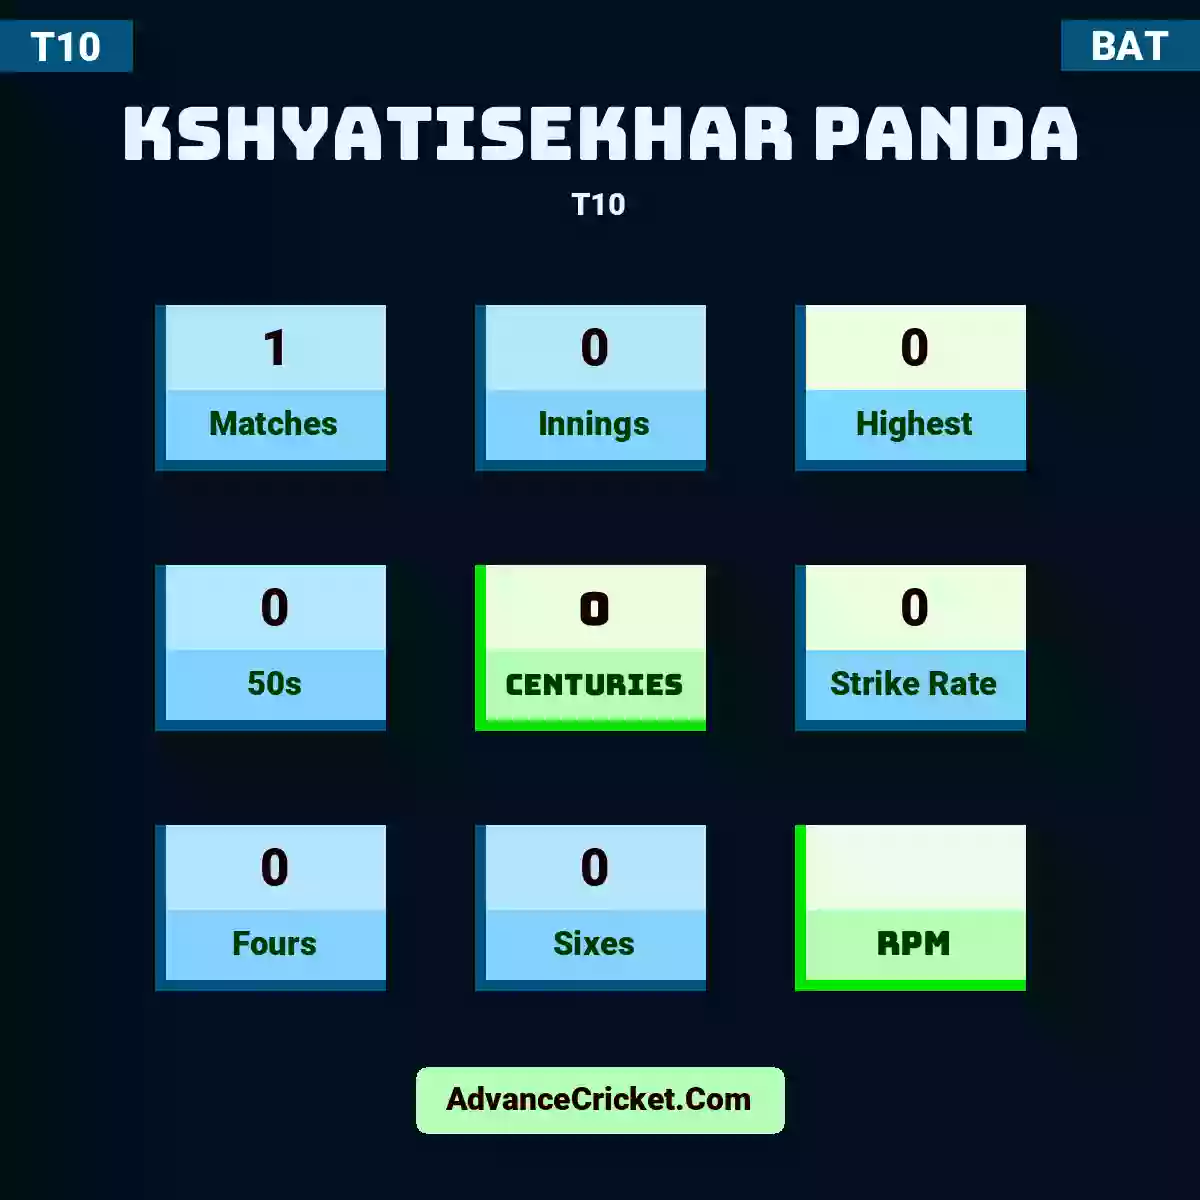 Kshyatisekhar Panda T10 , Kshyatisekhar Panda played 1 matches, scored 0 runs as highest, 0 half-centuries, and 0 centuries, with a strike rate of 0. K.Panda hit 0 fours and 0 sixes.